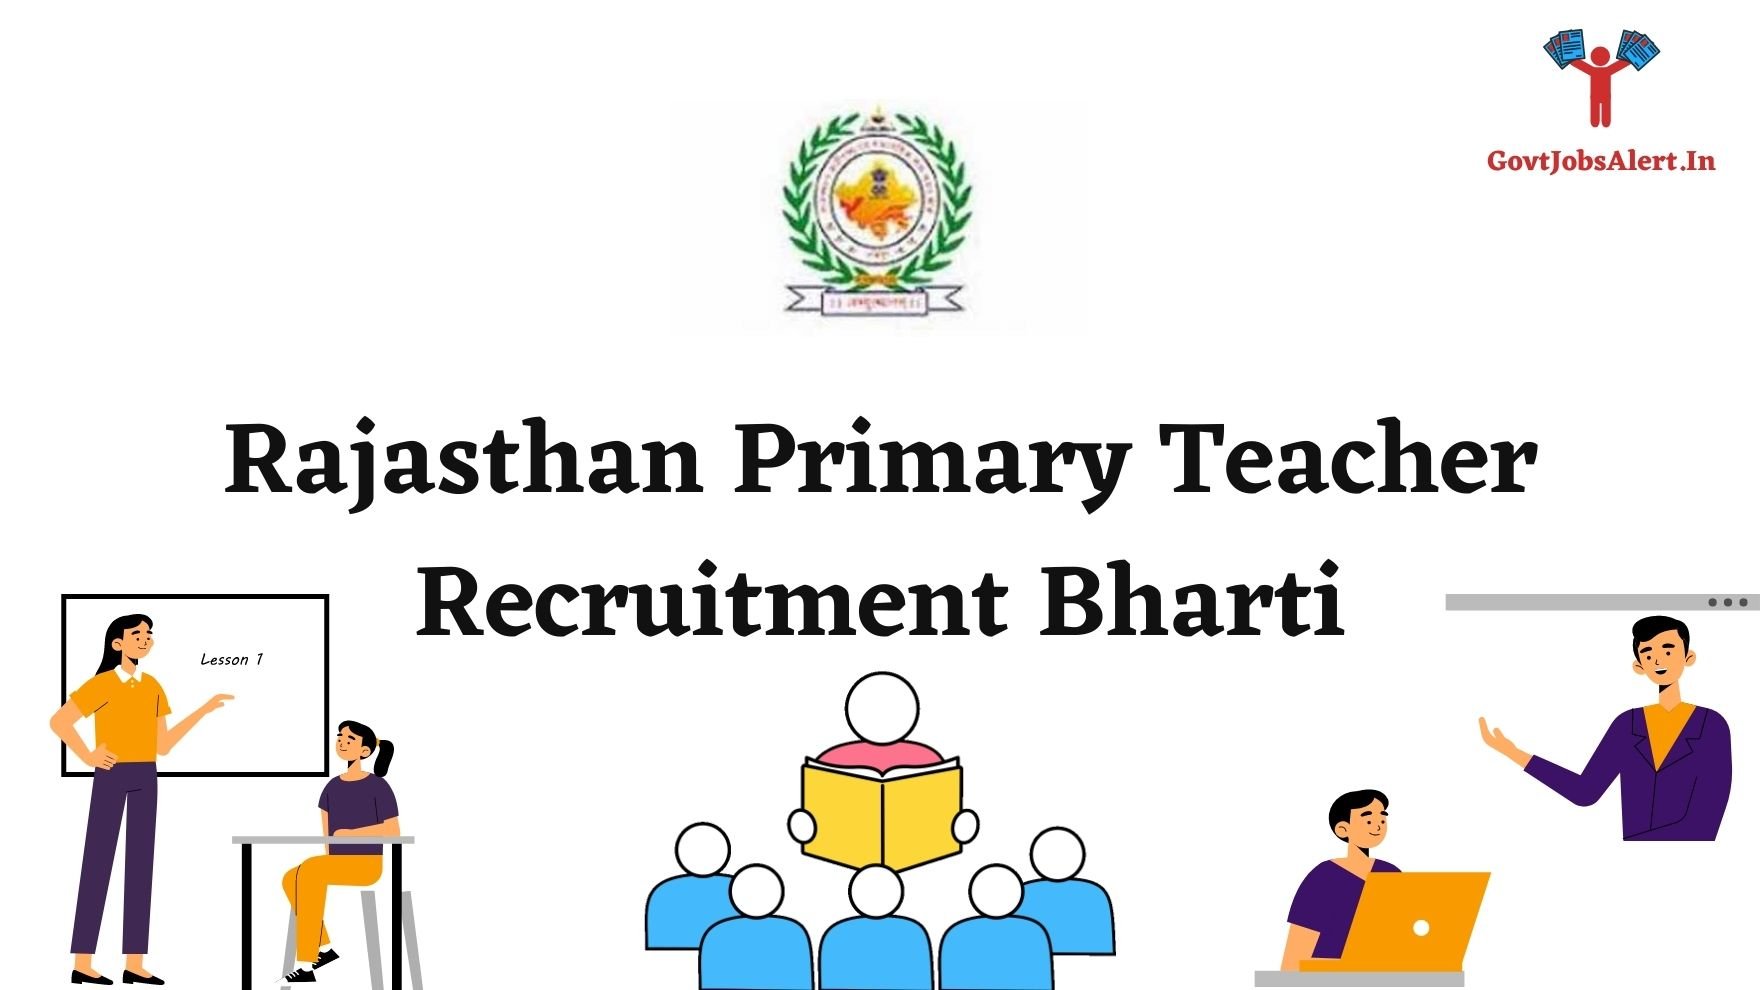 Rajasthan Primary Teacher Recruitment Bharti